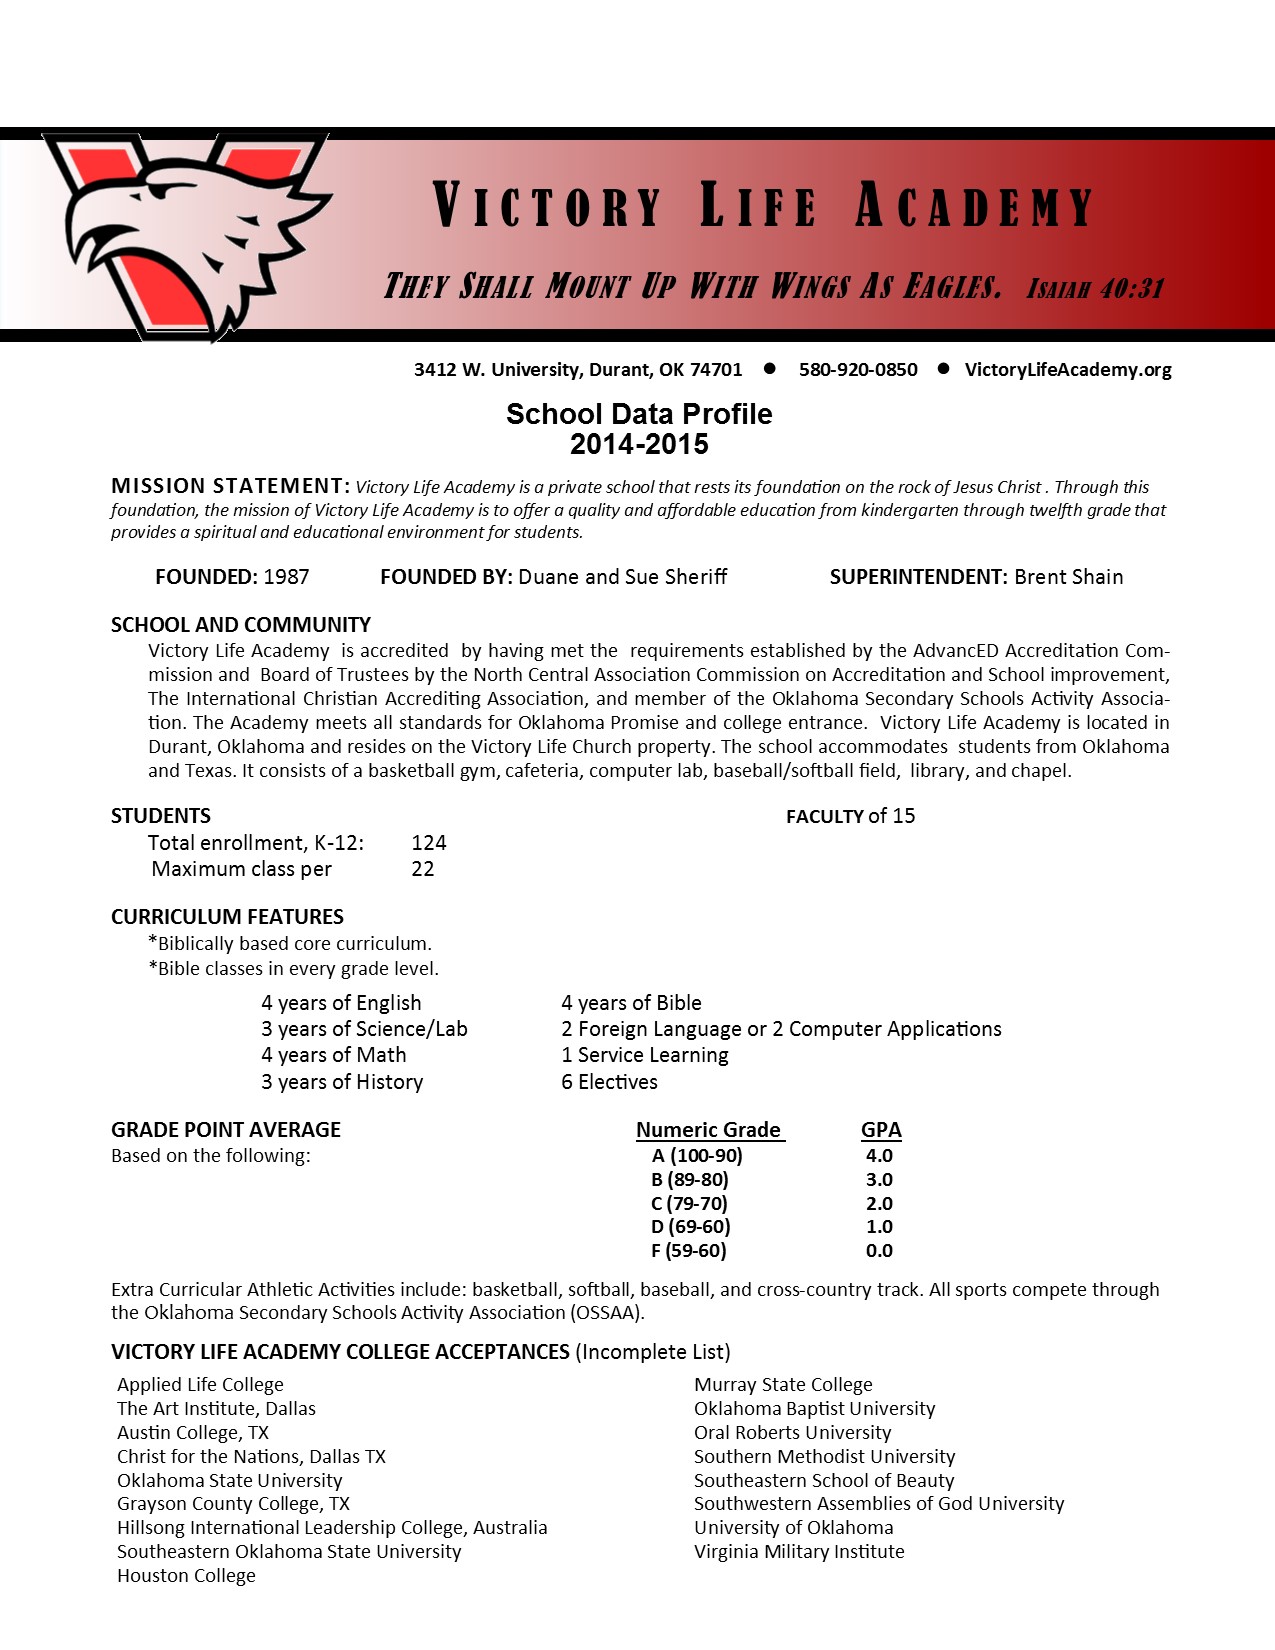 Victory Life Academy, Inc